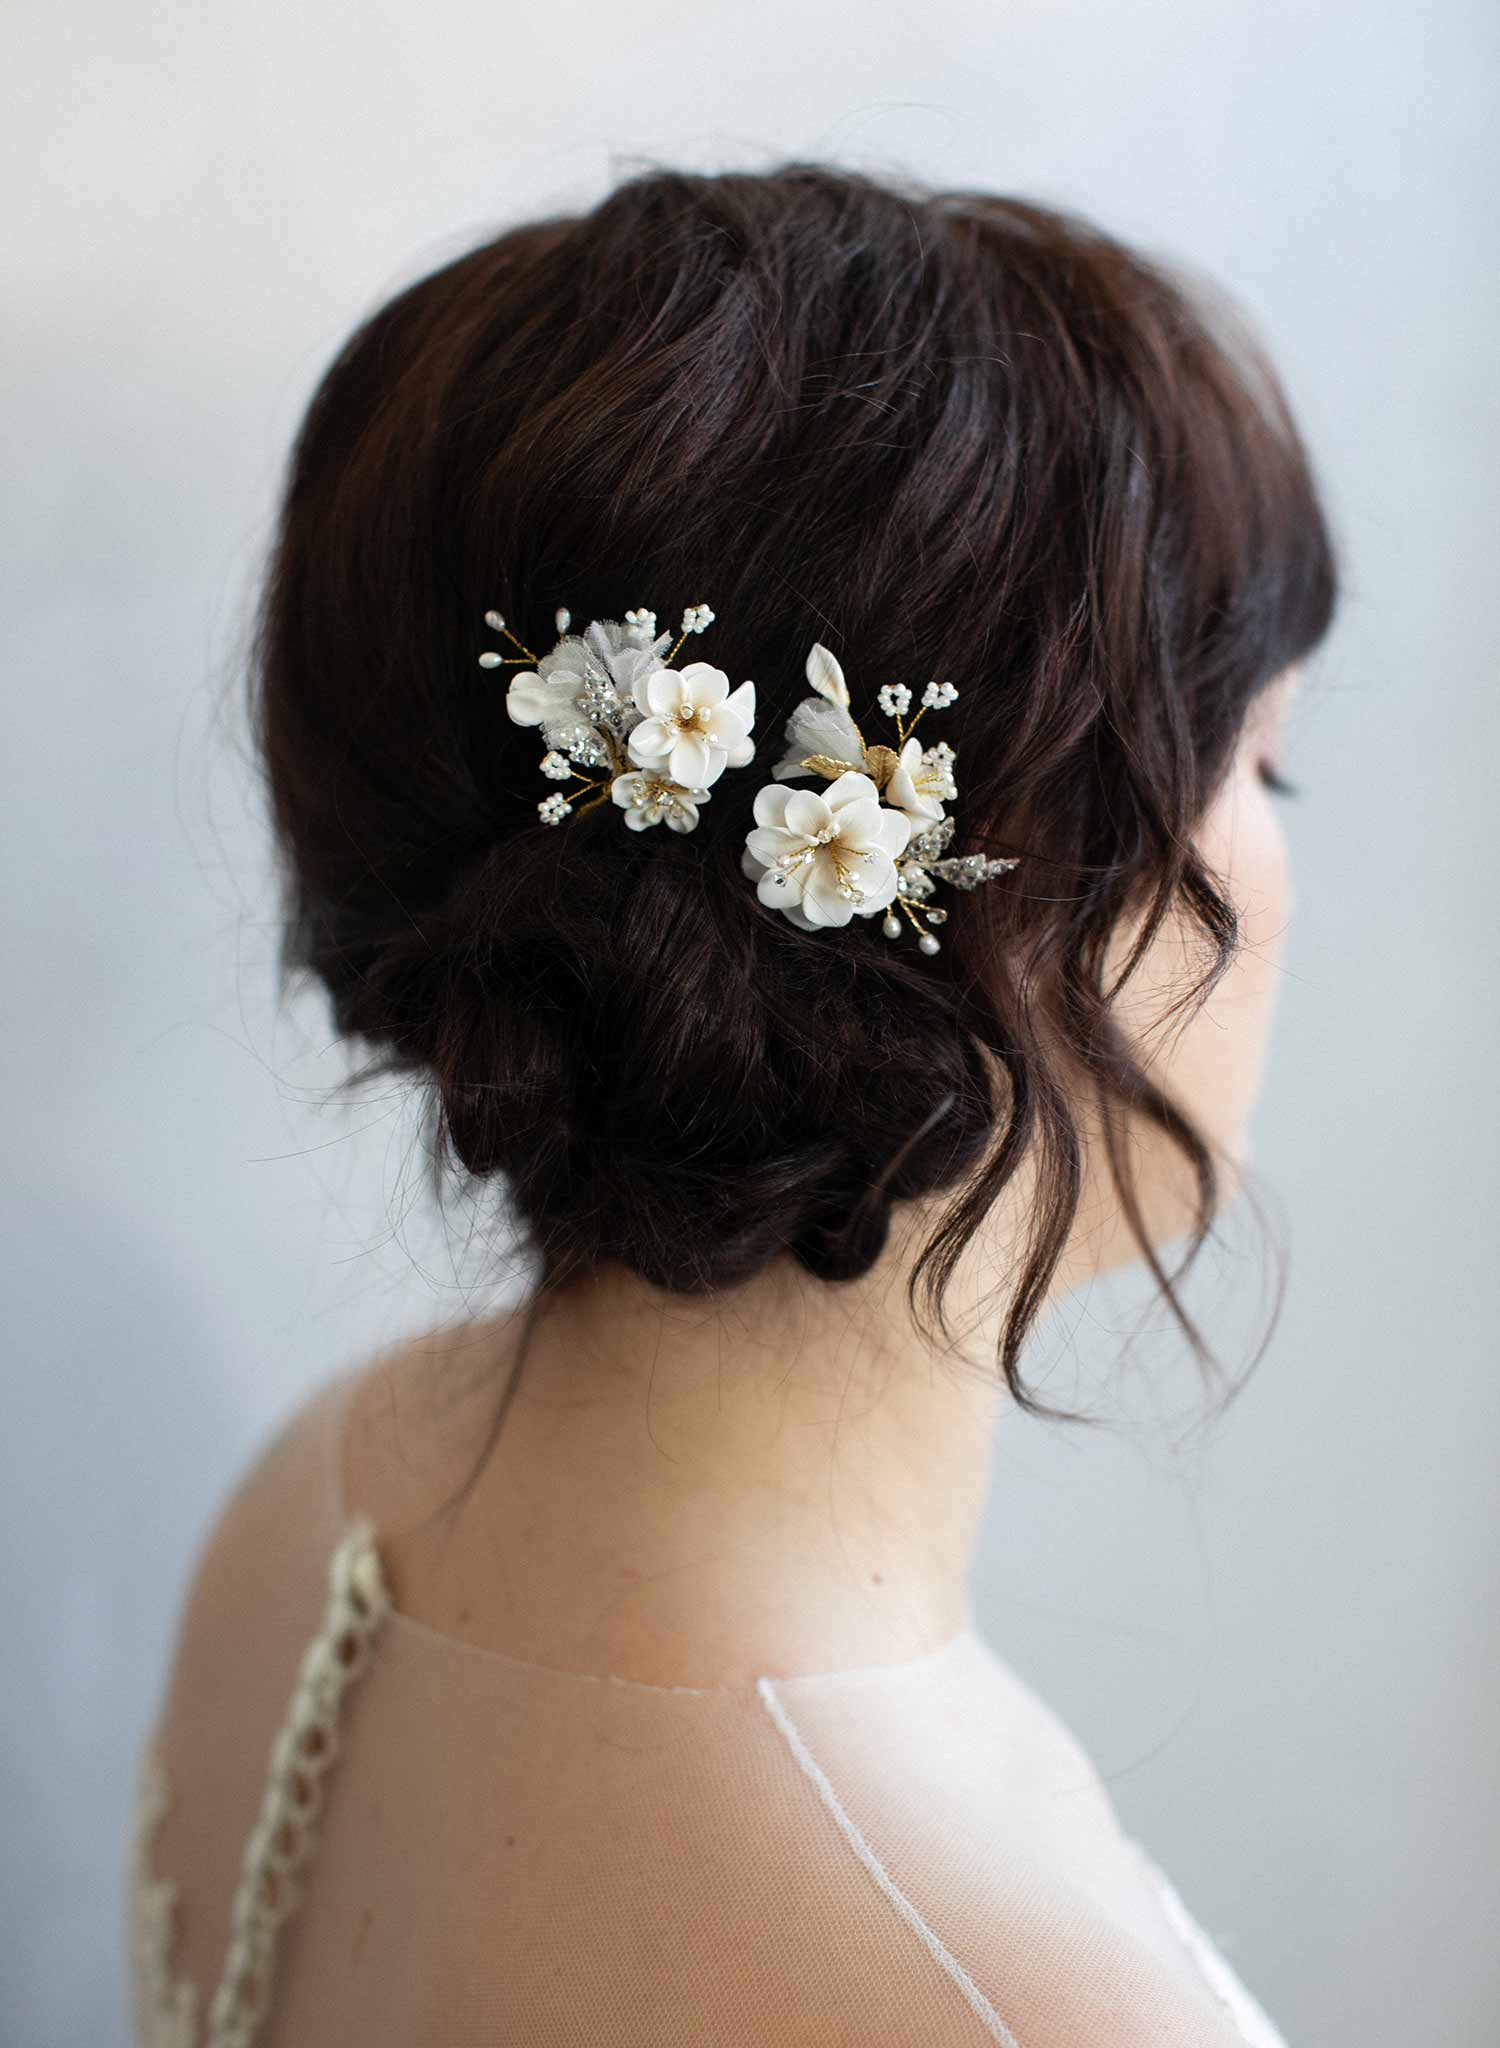 Pin on Amazing Bridal Hair & Make up